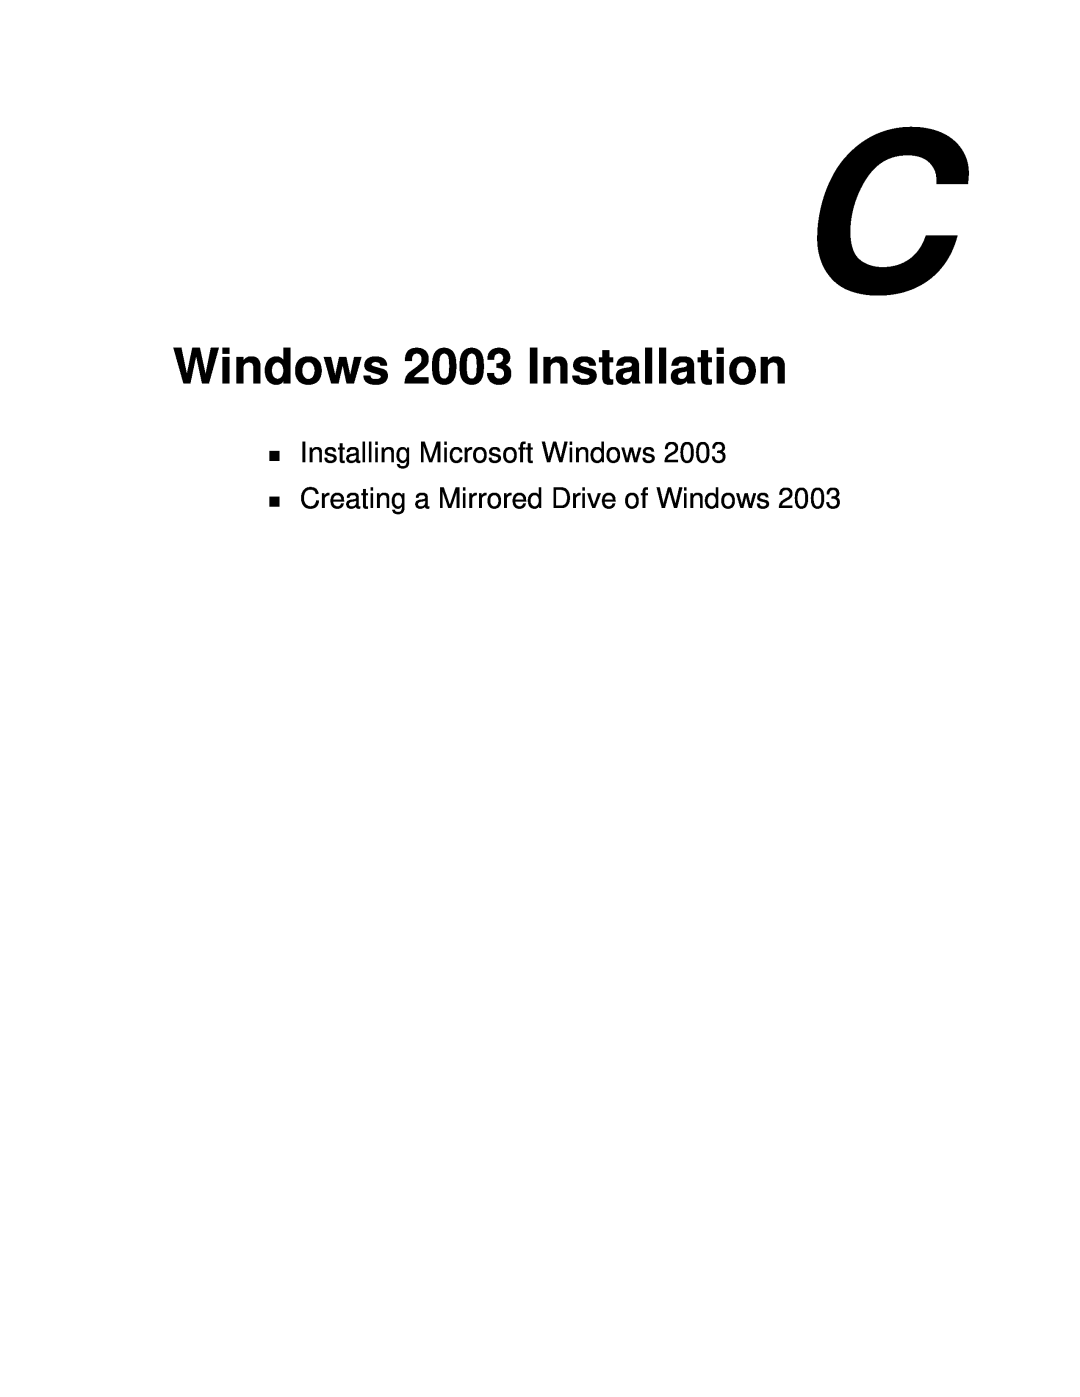 NEC 1080Xd manual Windows 2003 Installation, Installing Microsoft Windows Creating a Mirrored Drive of Windows 